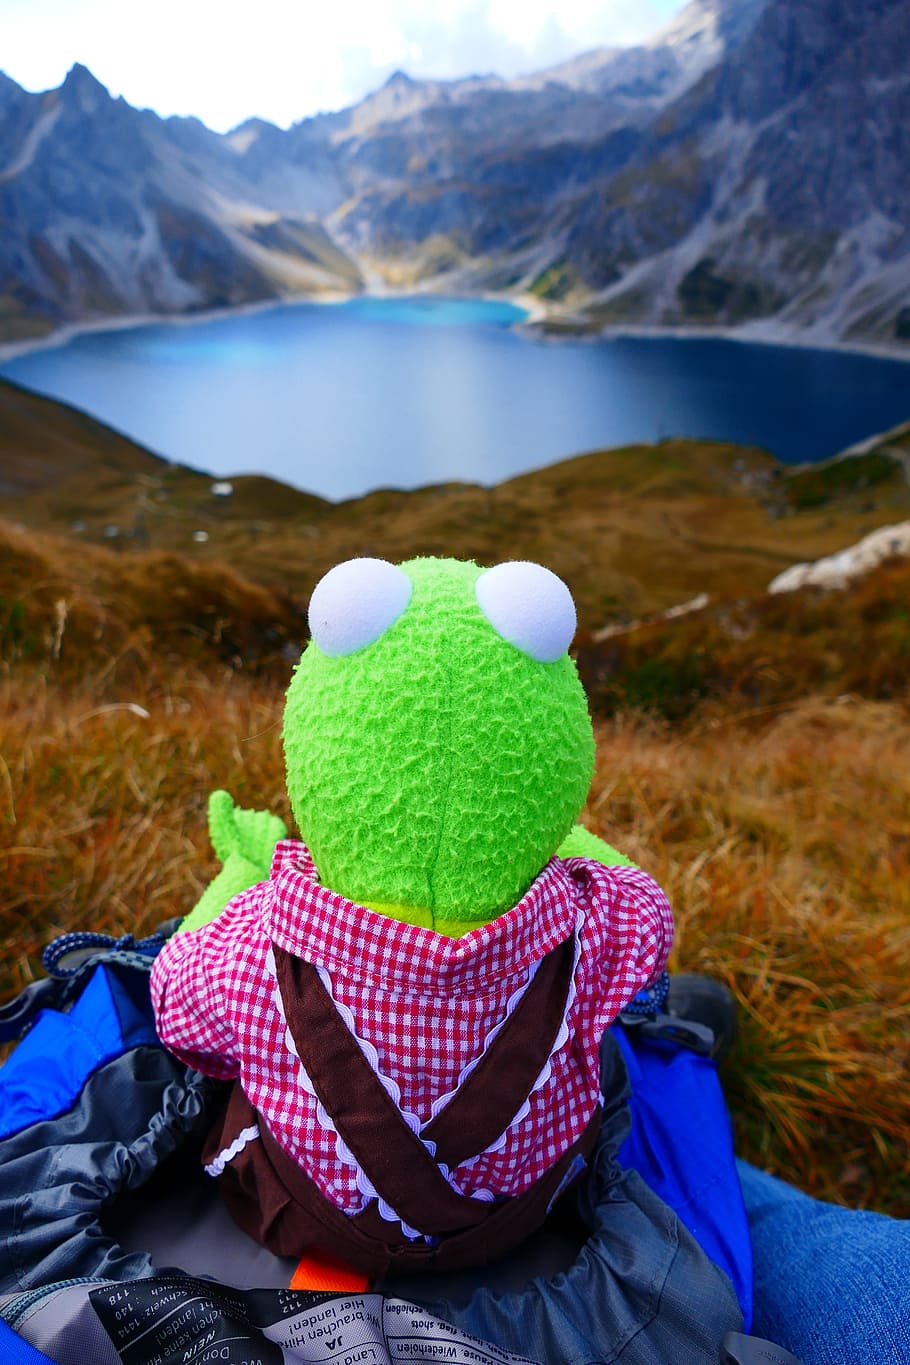 HD wallpaper: Kermit the Frog plush toy sitting on blue textile, reservoir